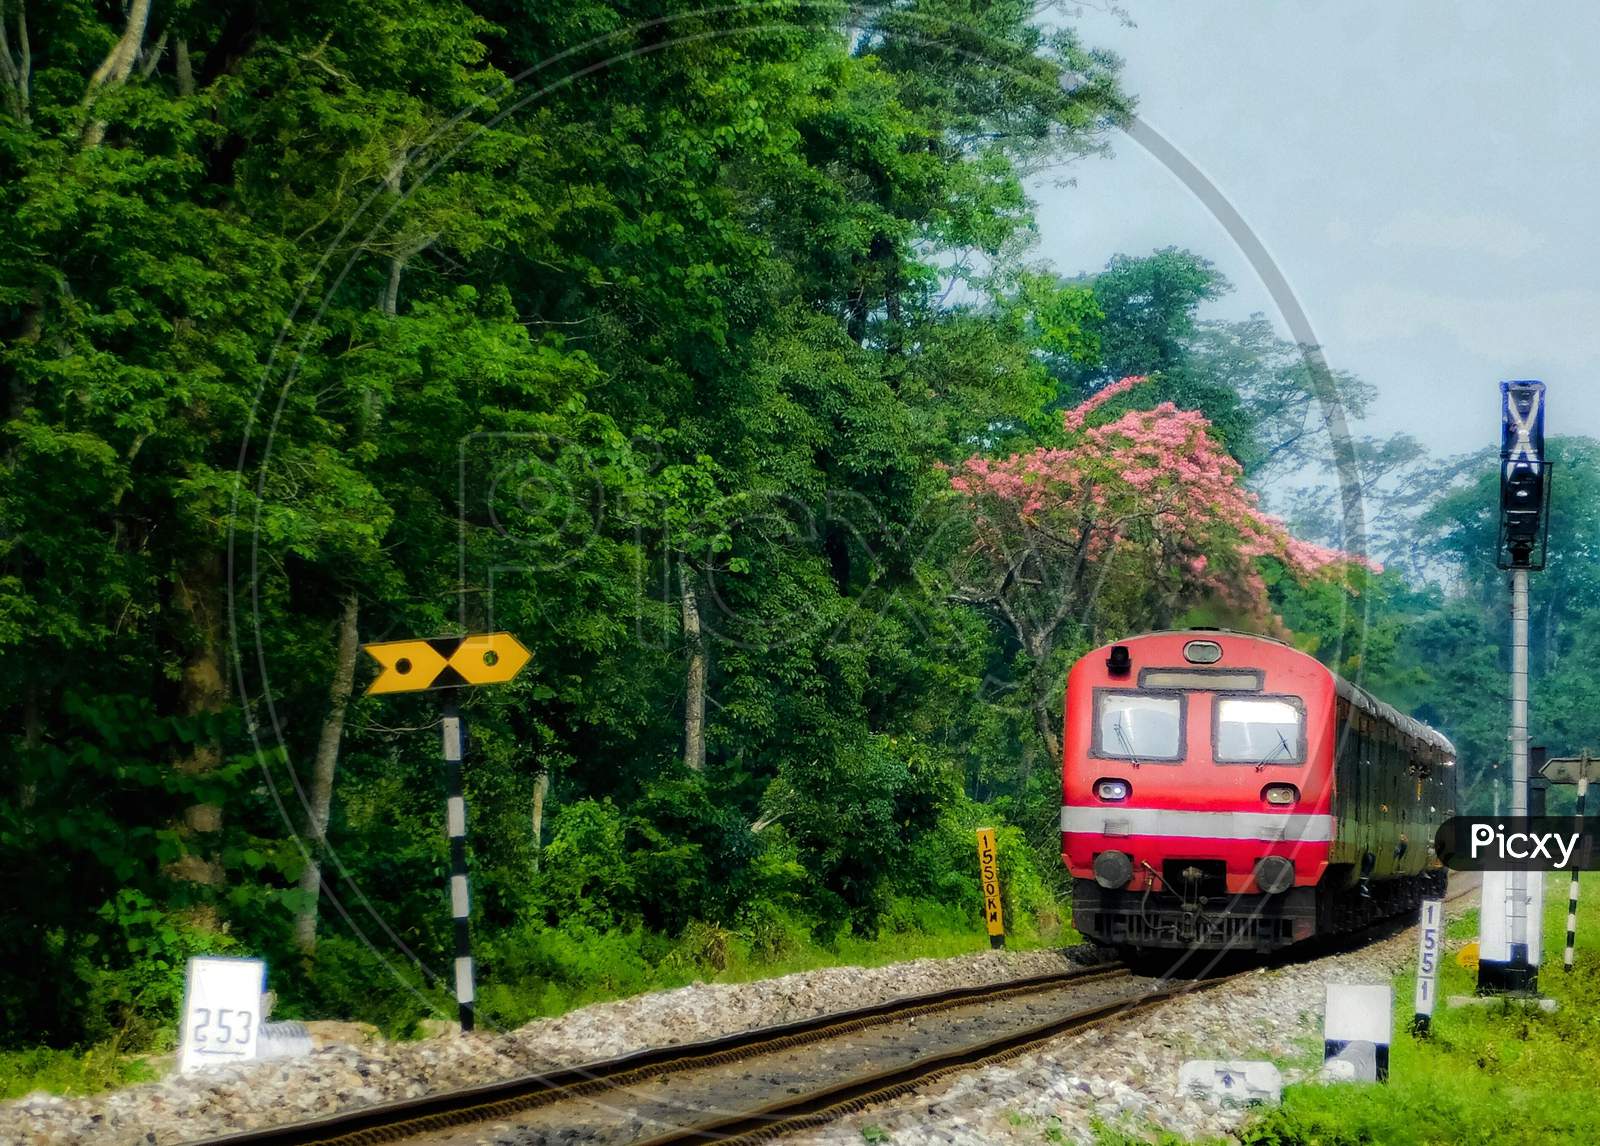 Running train in between the green woods .